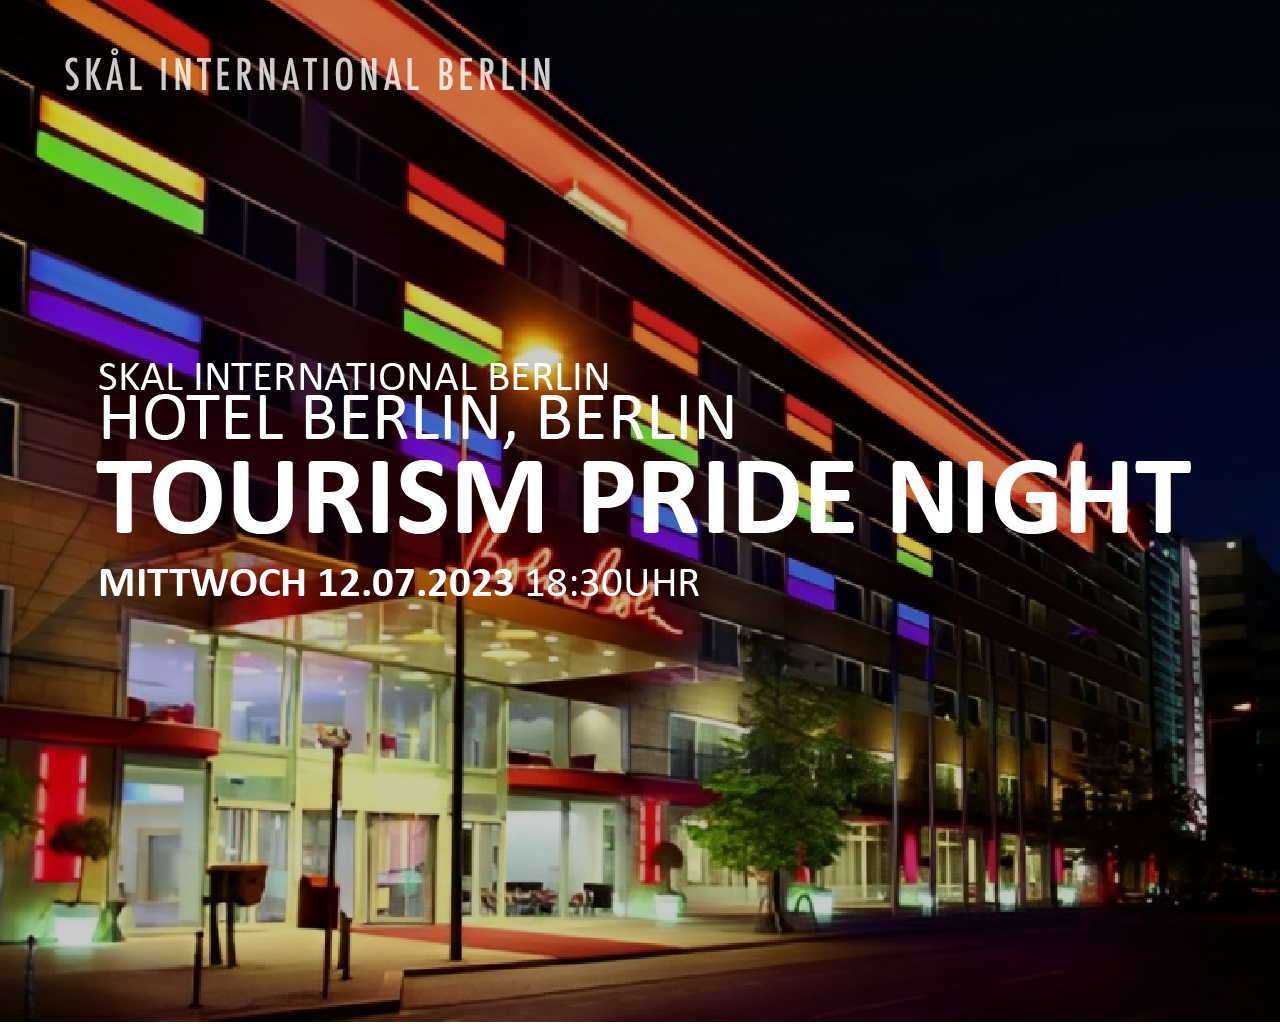 Tourism Pride Night - Skal International Berlin